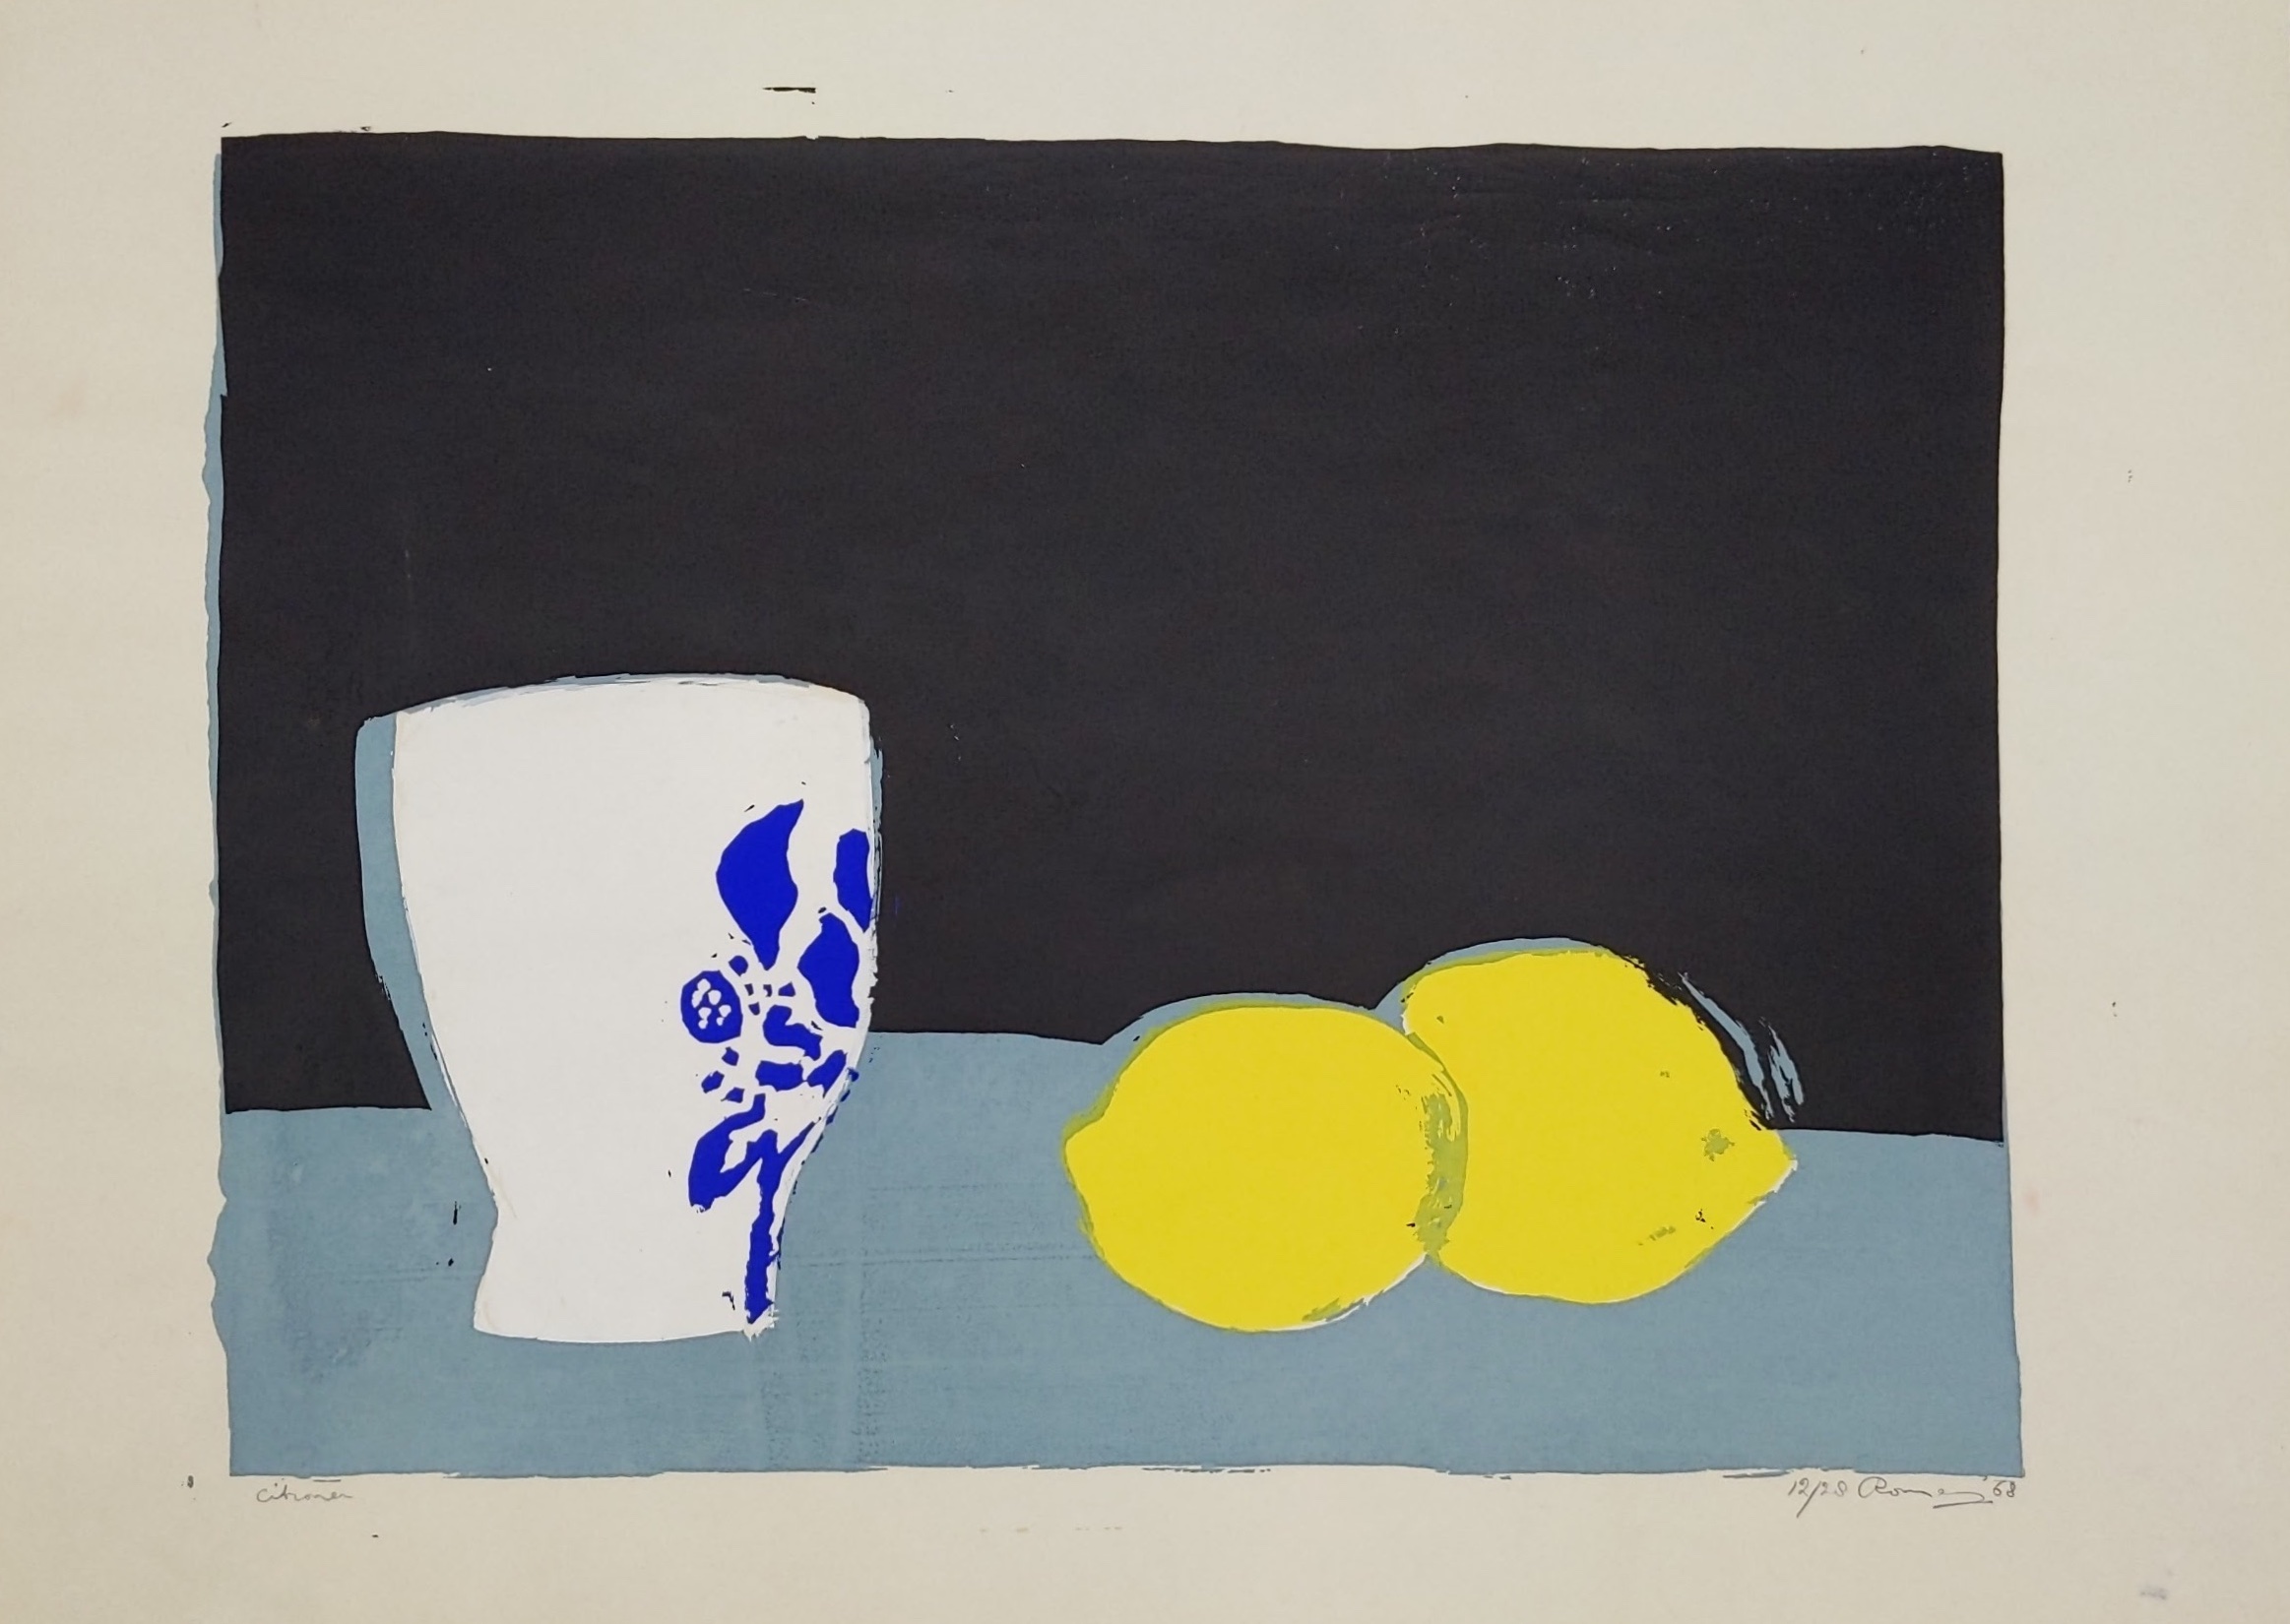 "Citroner", 1968, screentryck 45 x 61 cm. Ed.28. 3 200 kr (320 €)